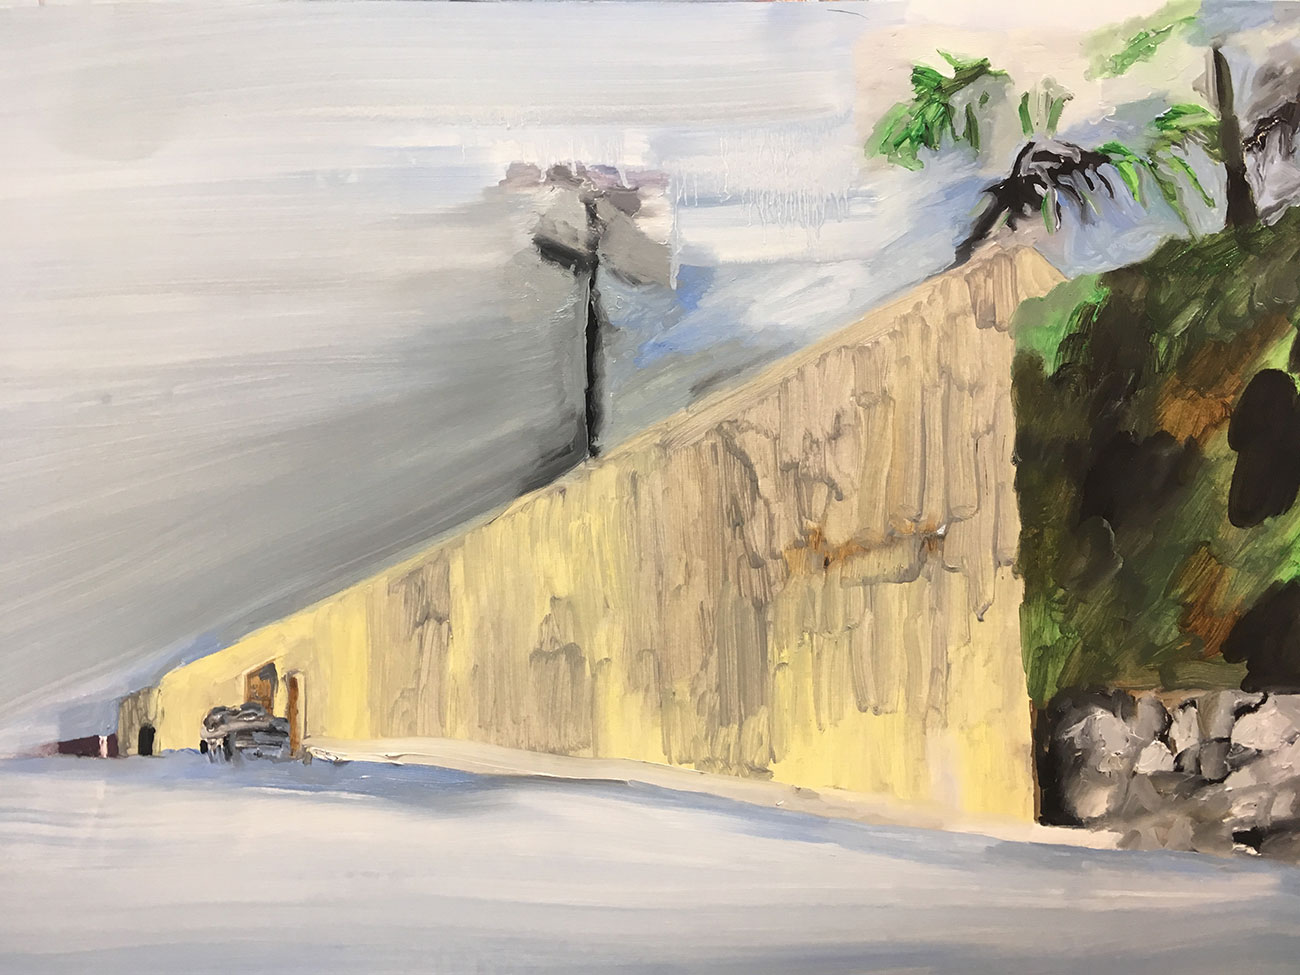 Casas en venta en Caracas, 2018 - Oil on paper 50 x 65 cm